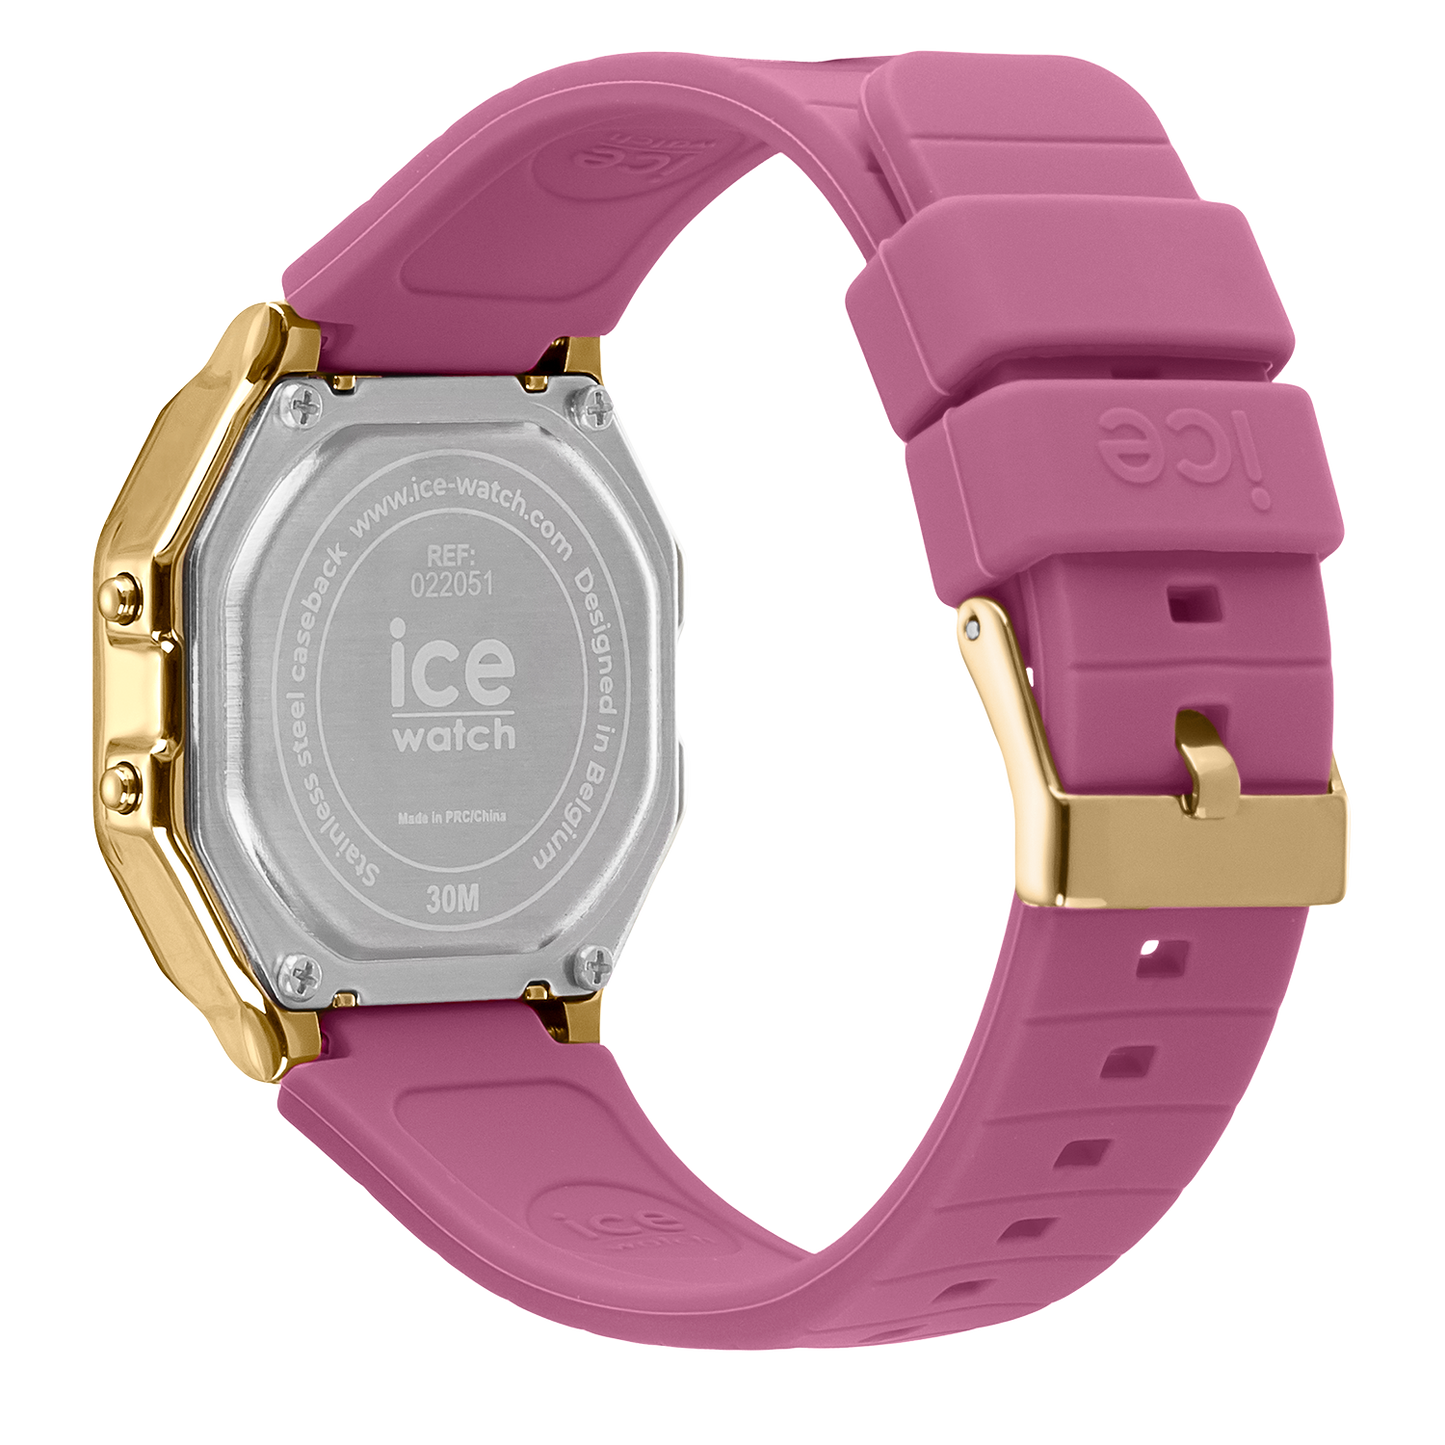 Ice-Watch | ICE Digit Retro - Blush Violet (Small)